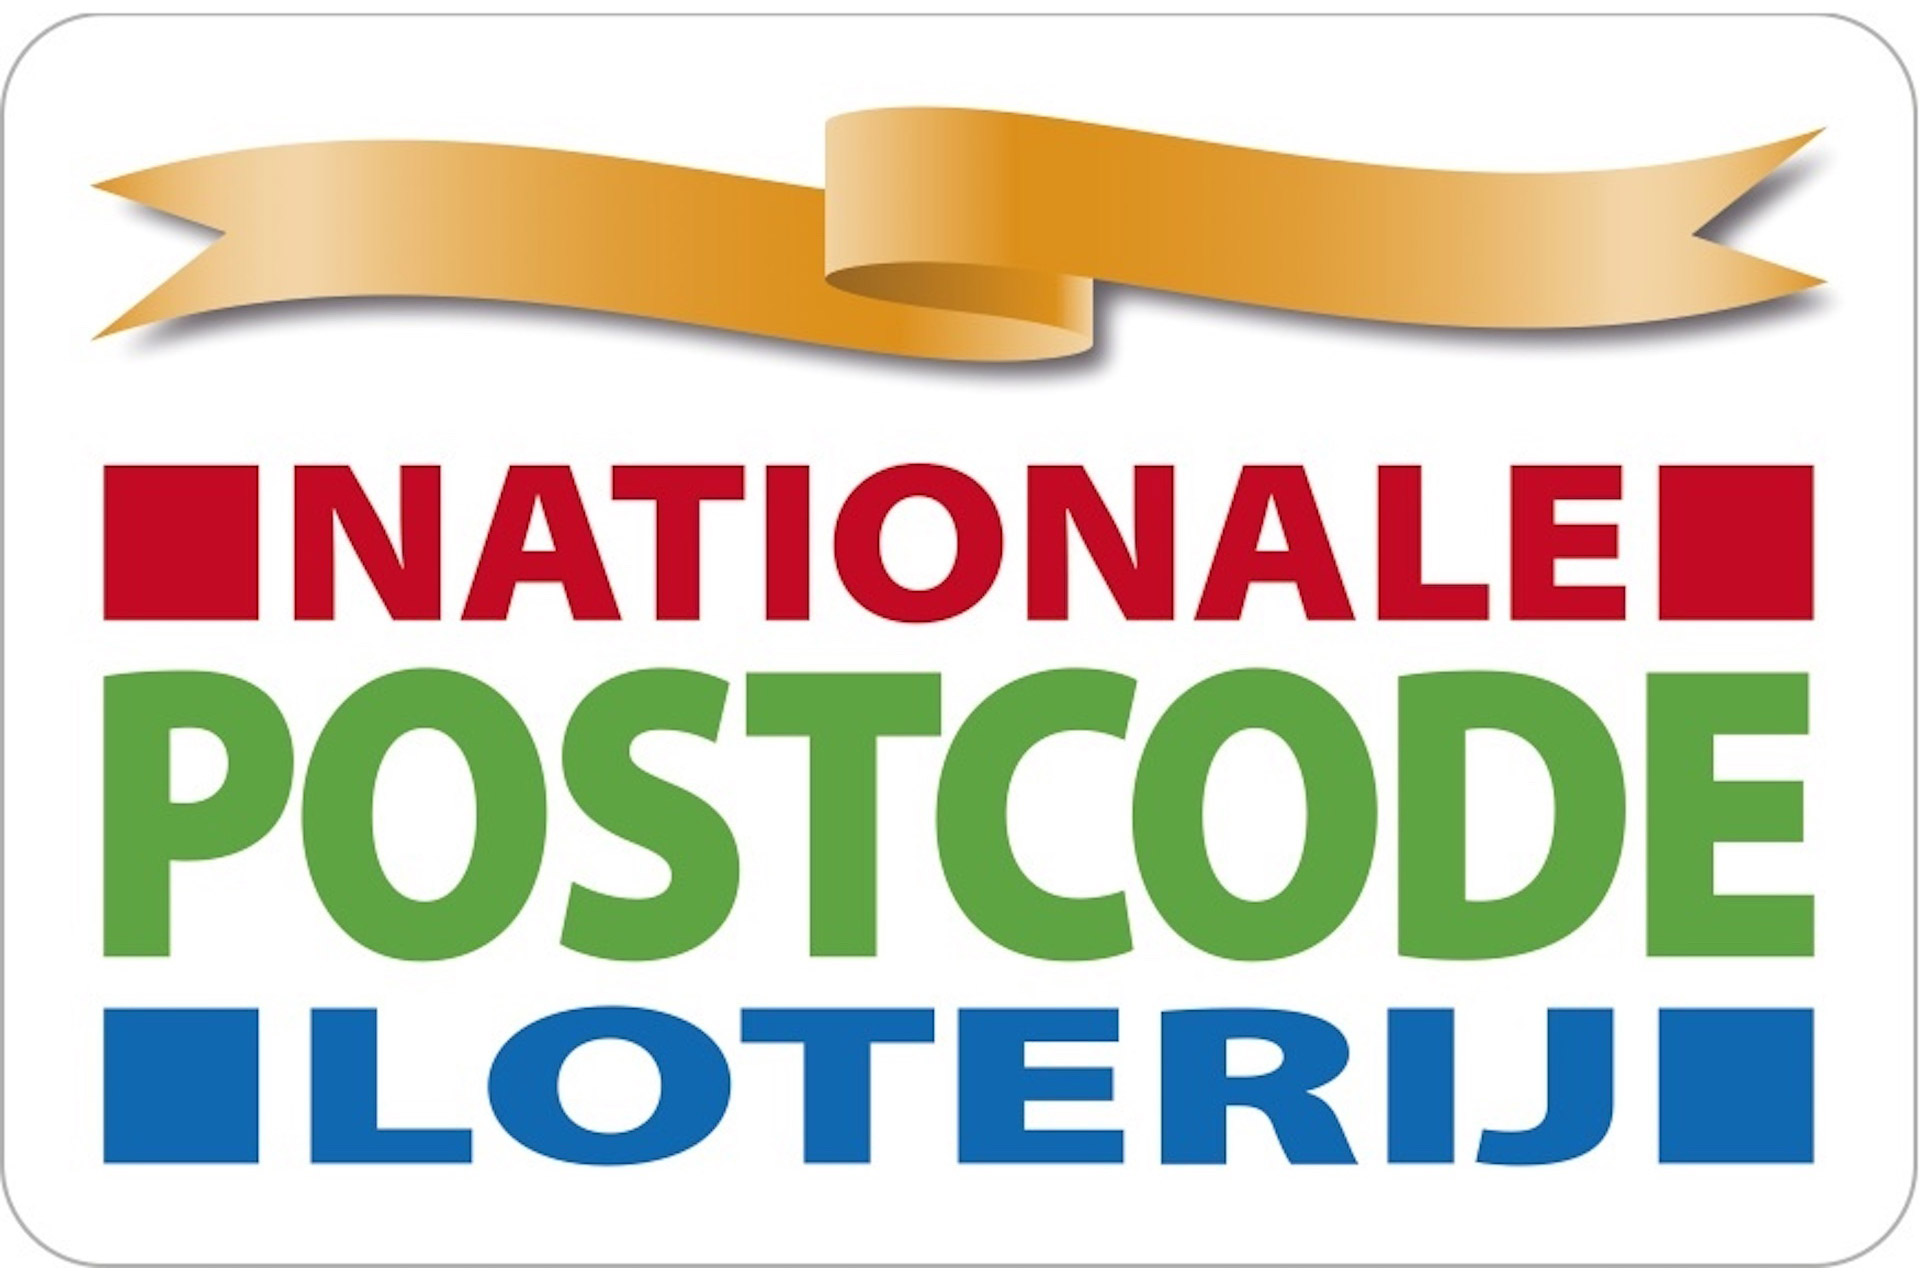 Dutch Postcode Lottery Announces New Grant to OCCRP